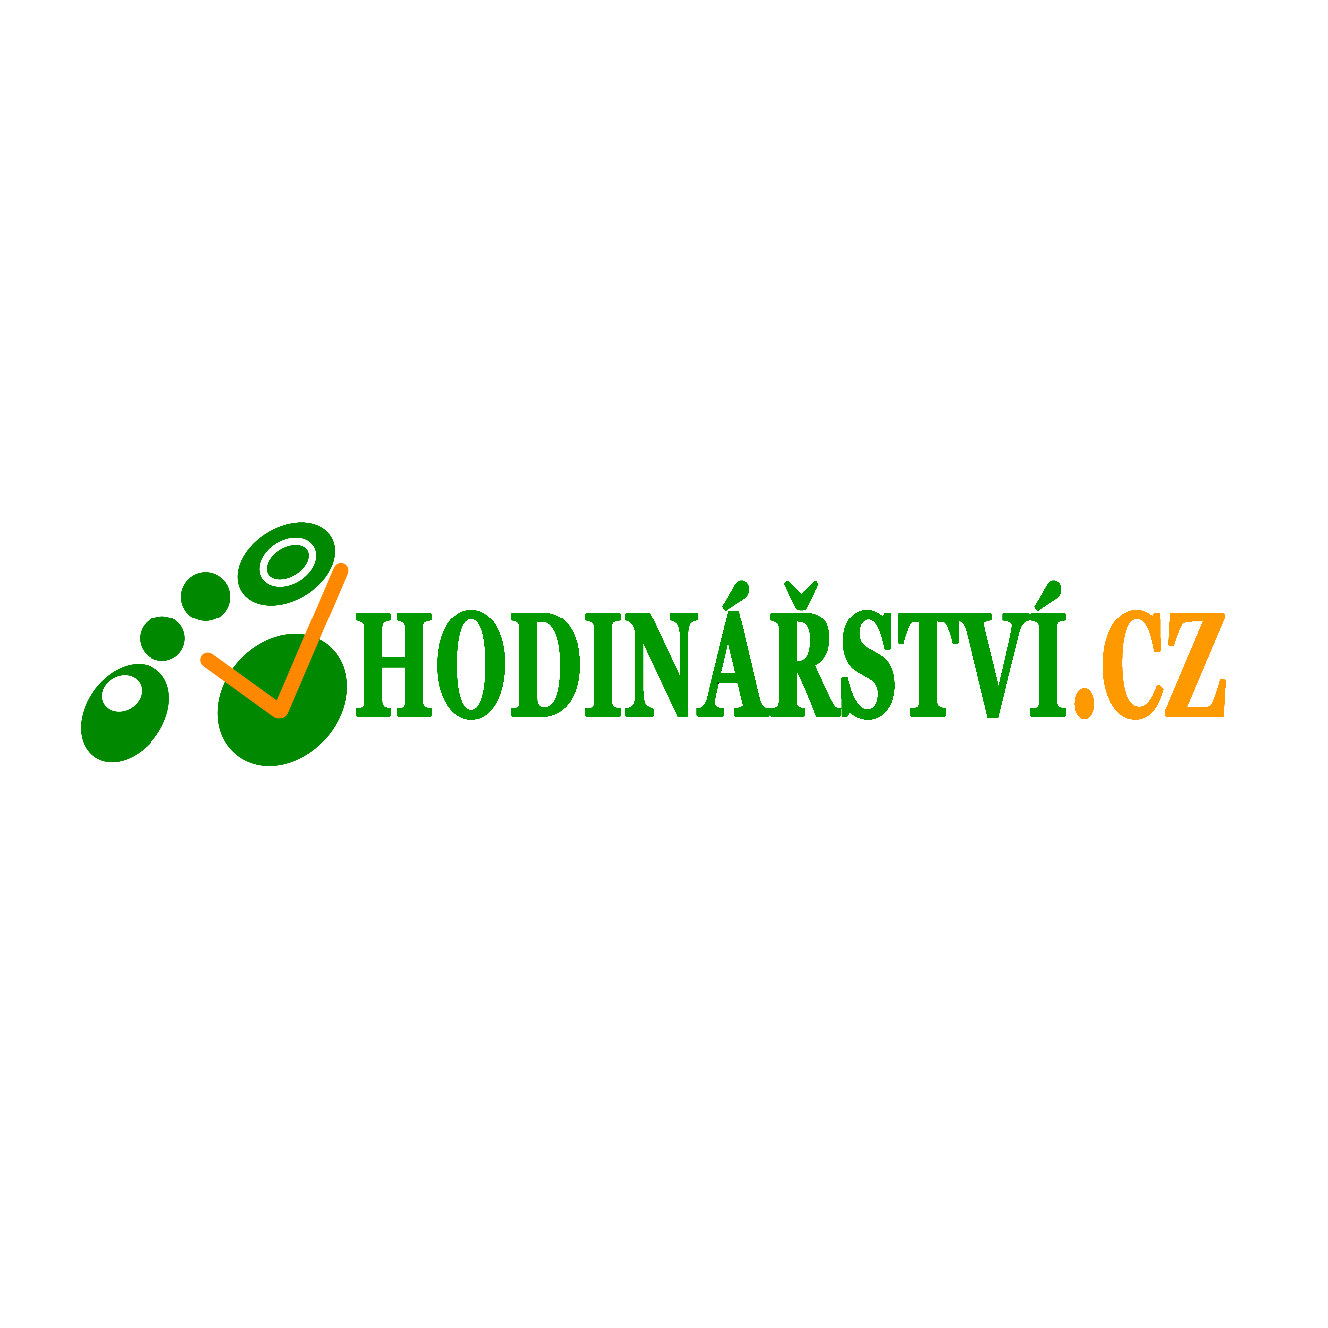 Hodinarstvi.cz slevový kupón